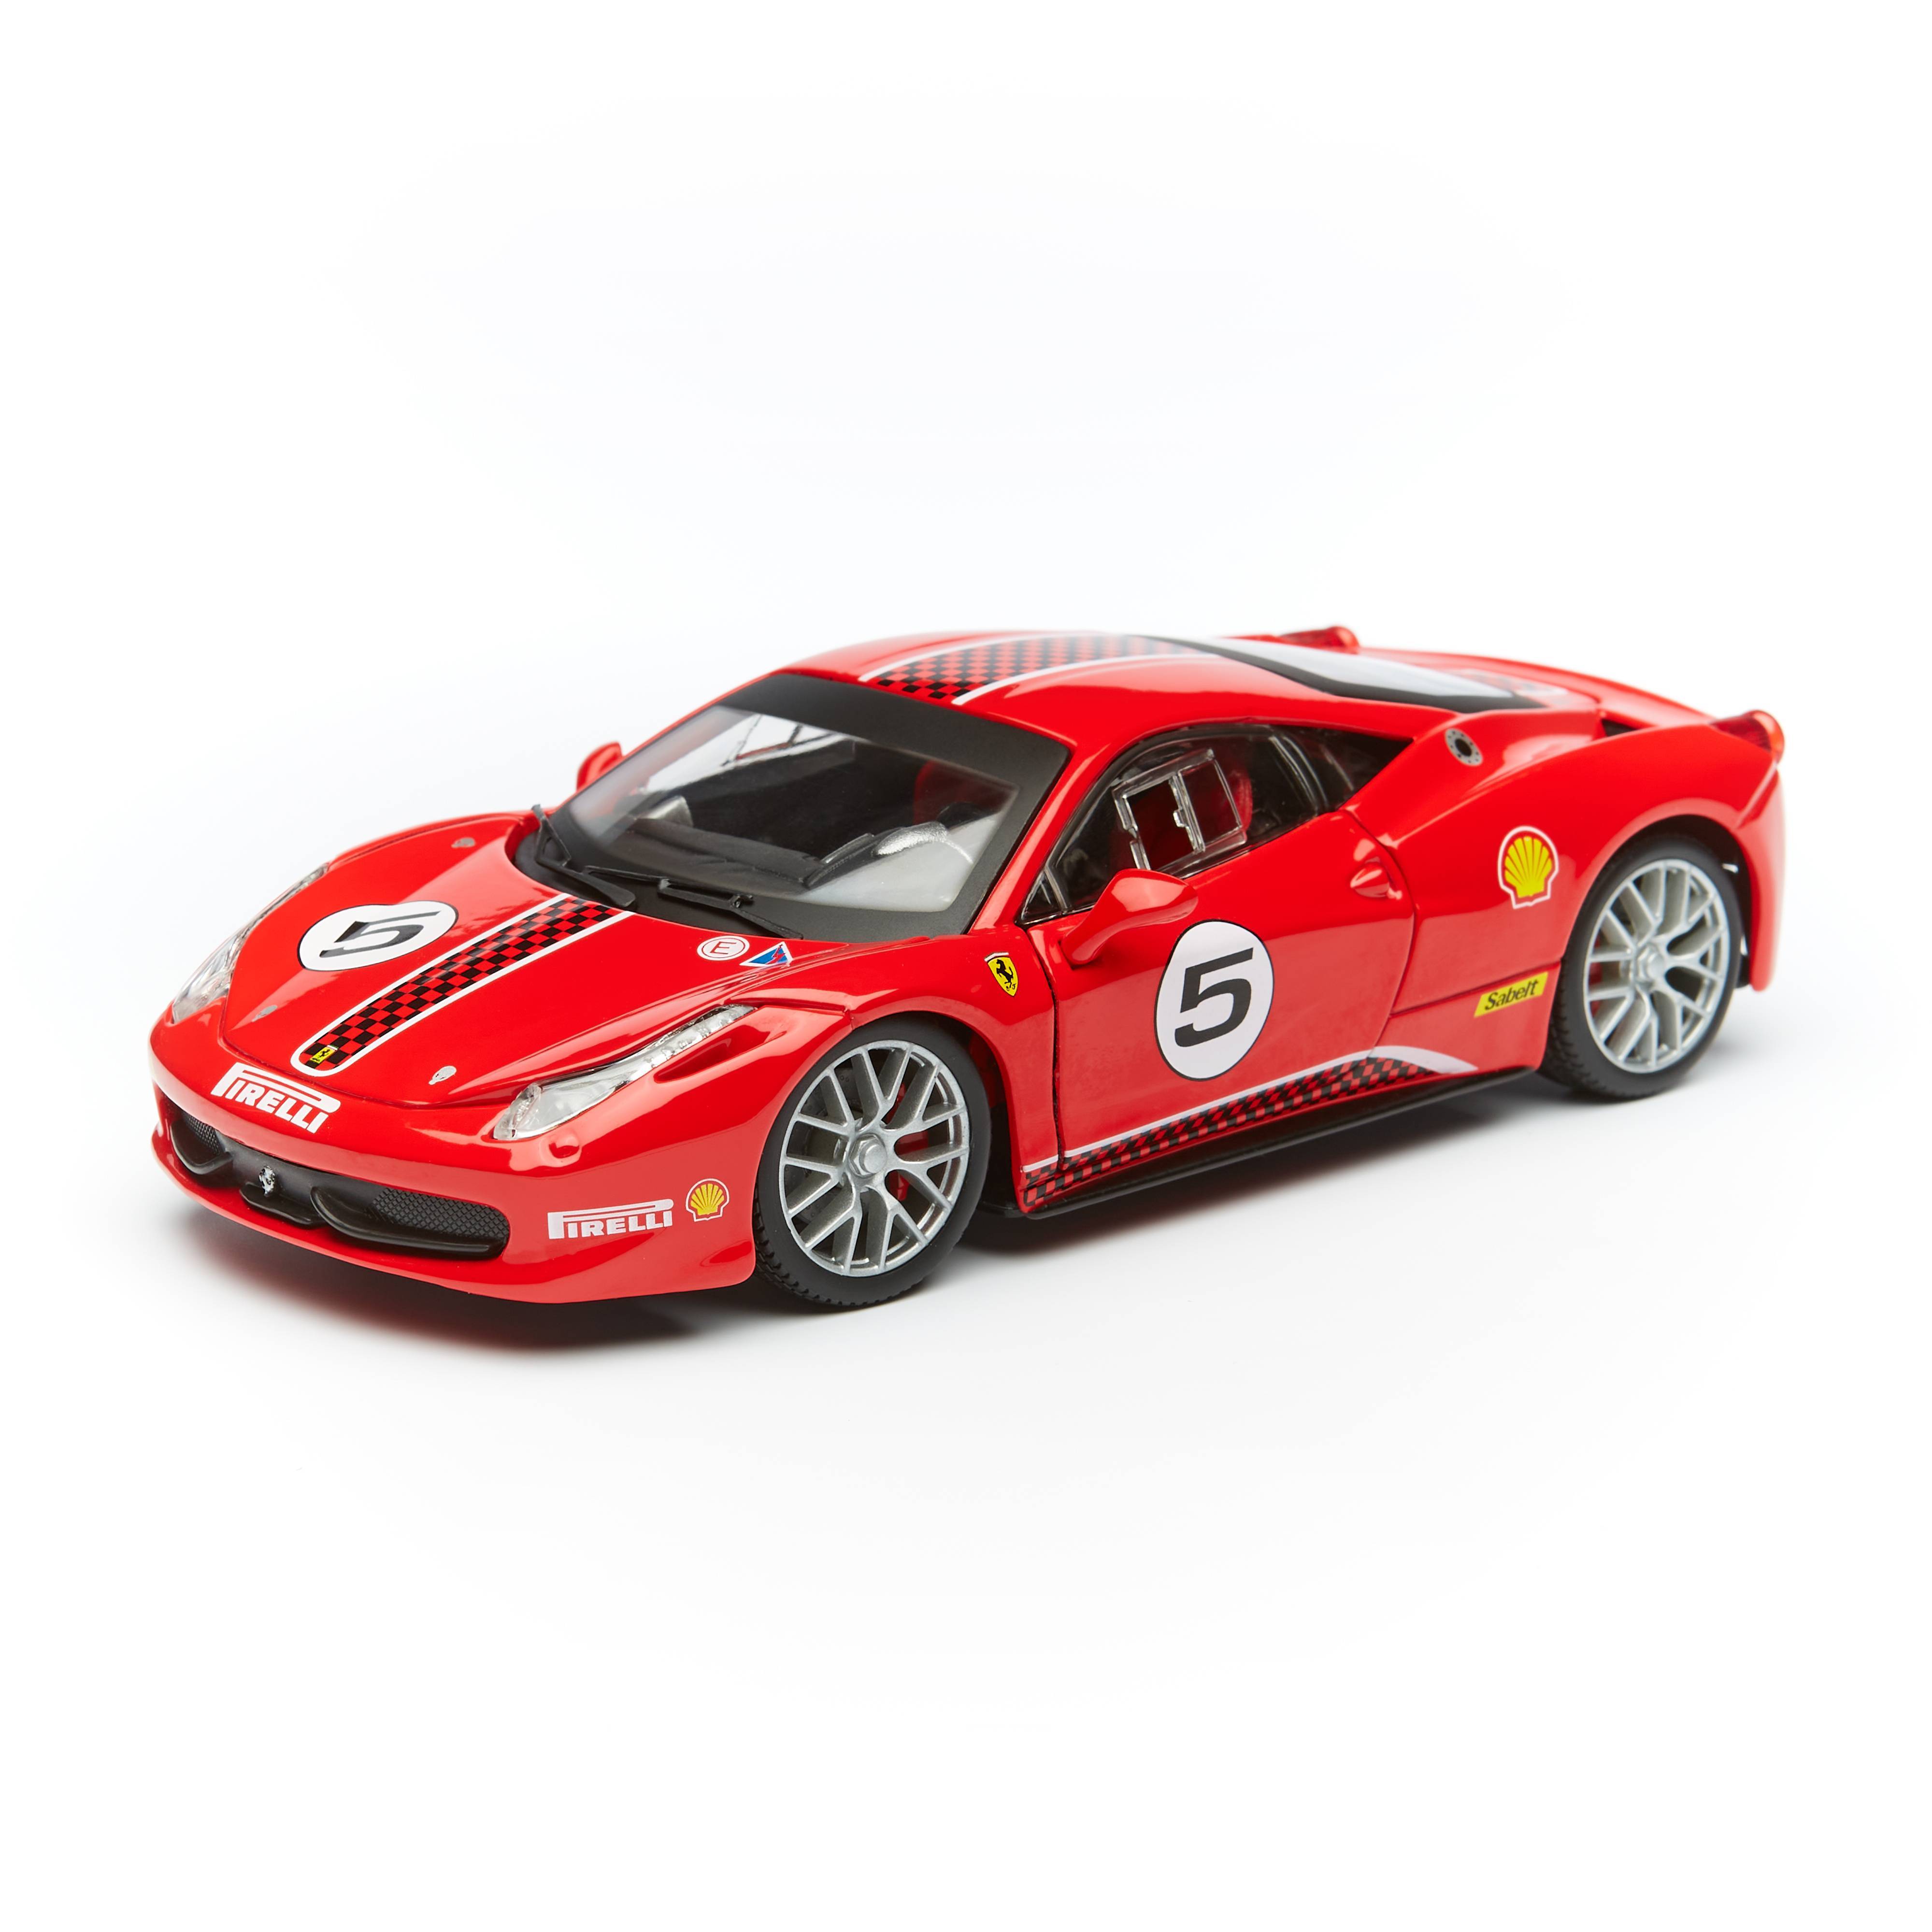 Bburago Коллекционная Машинка Феррари 1:24 Ferrari 458 Challenge, красный bburago коллекционная машина bb 18 16008 1 18 ferrari 488 gtb red красный